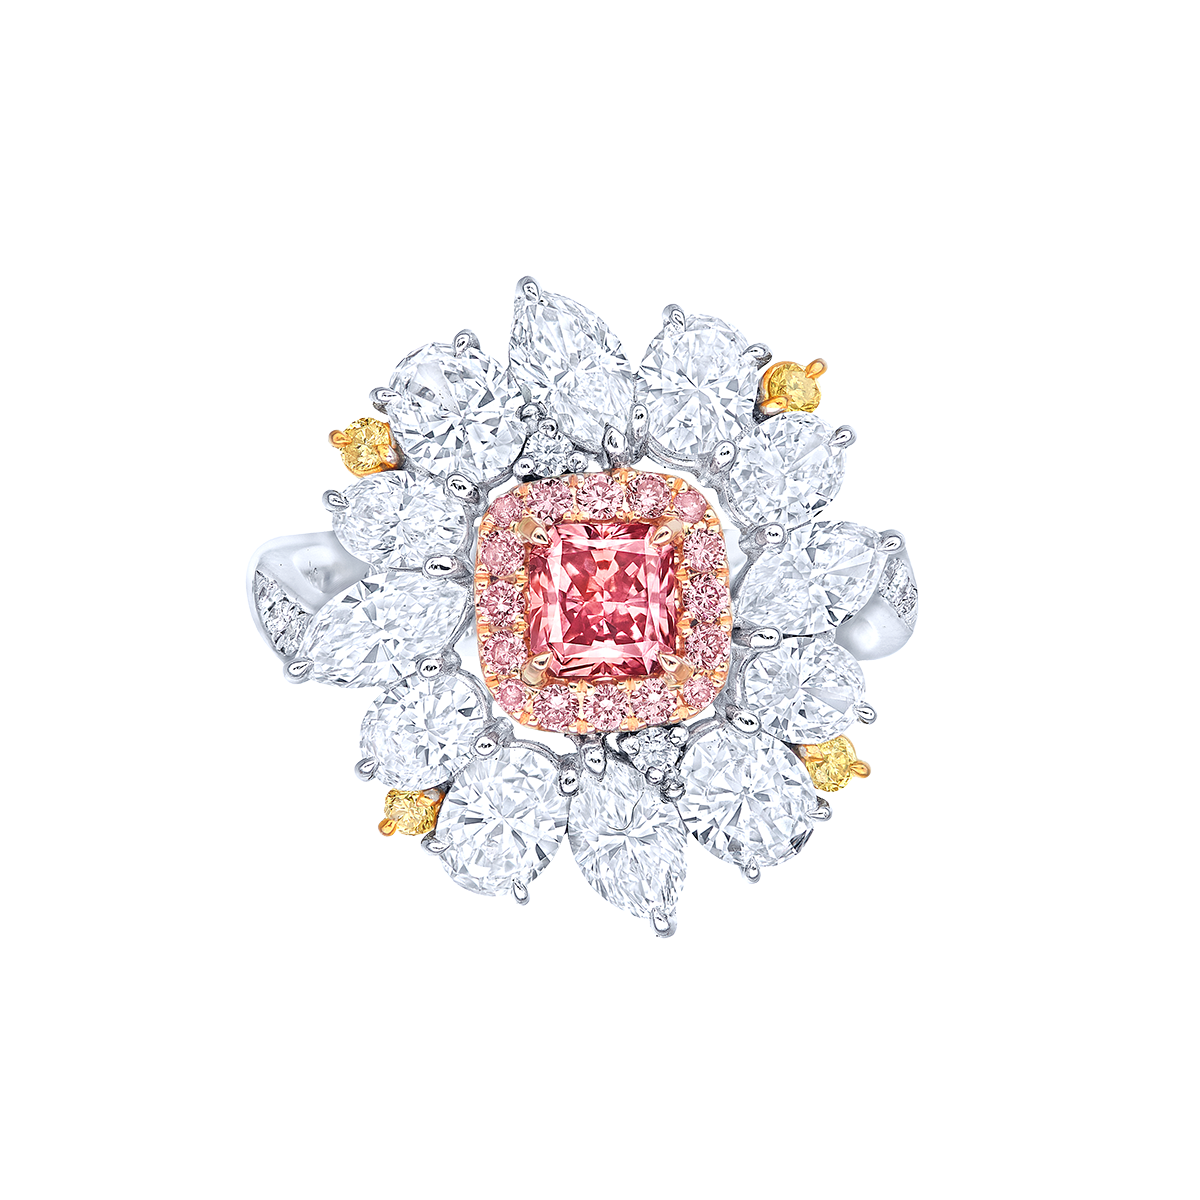 阿蓋爾粉鑽鑽戒 0.48克拉
Pink Diamond from Argyle Mine
and diamond Ring 